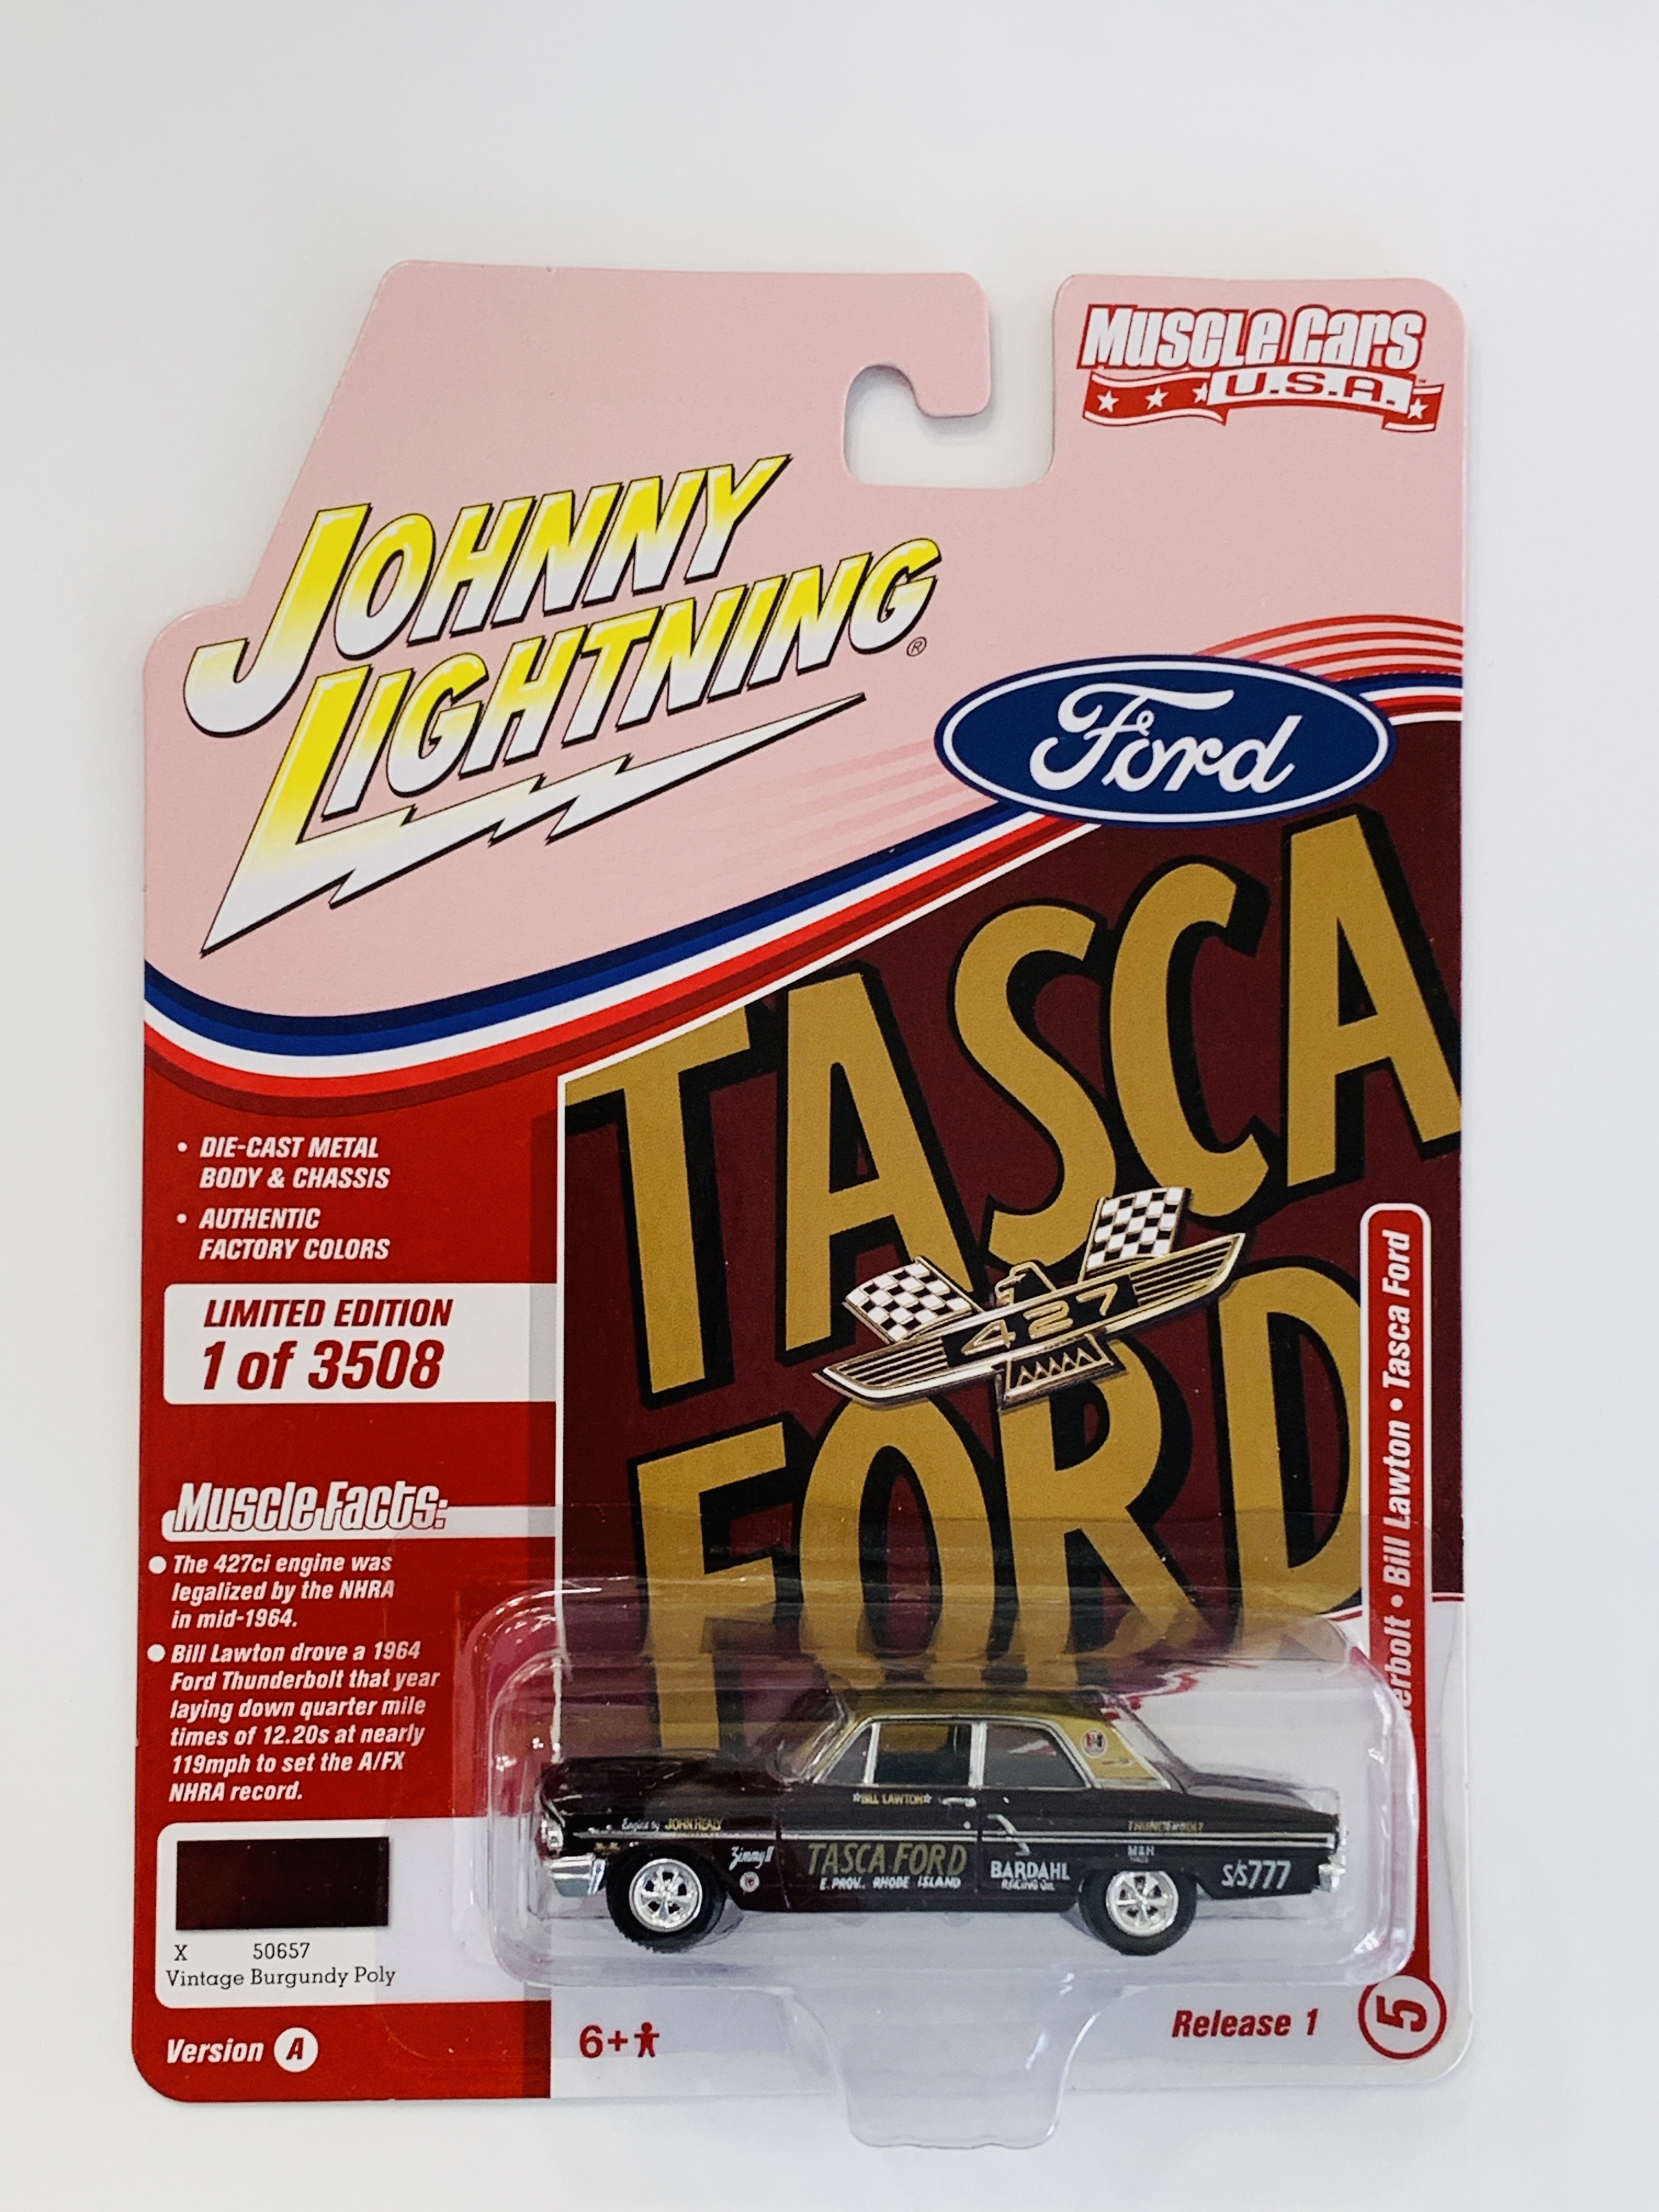 Johnny Lightning Muscle Cars U.S.A. 1964 Ford Thunderbolt Bill Lawton Tasca Ford